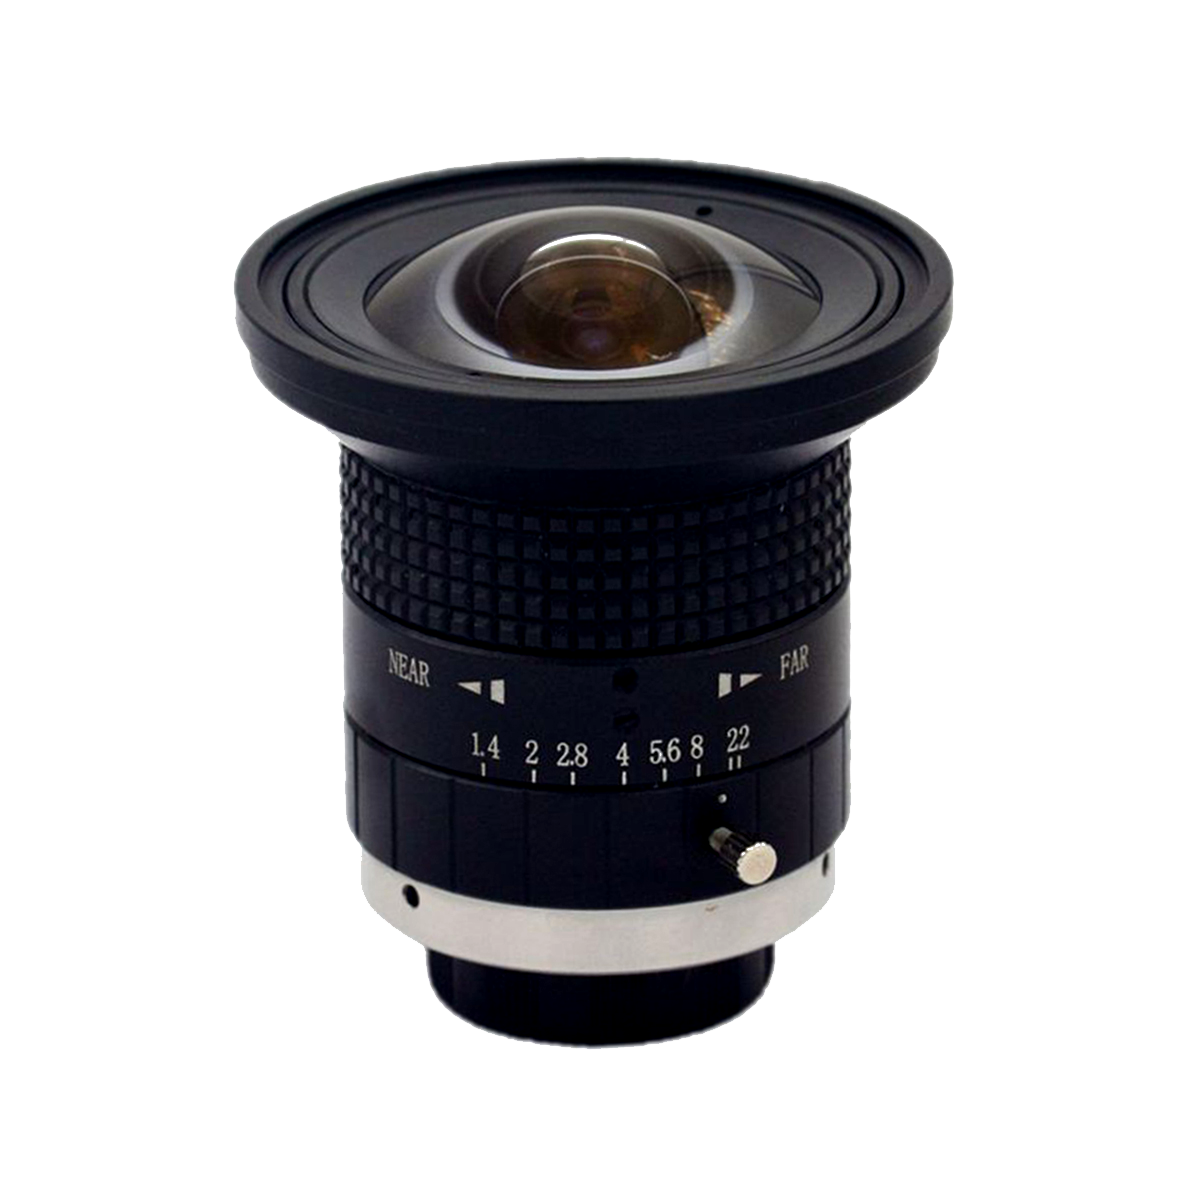 2/3" 3.5mm 135HFOV  F/1.4 4K (8MP) C Mount Fisheye Lens